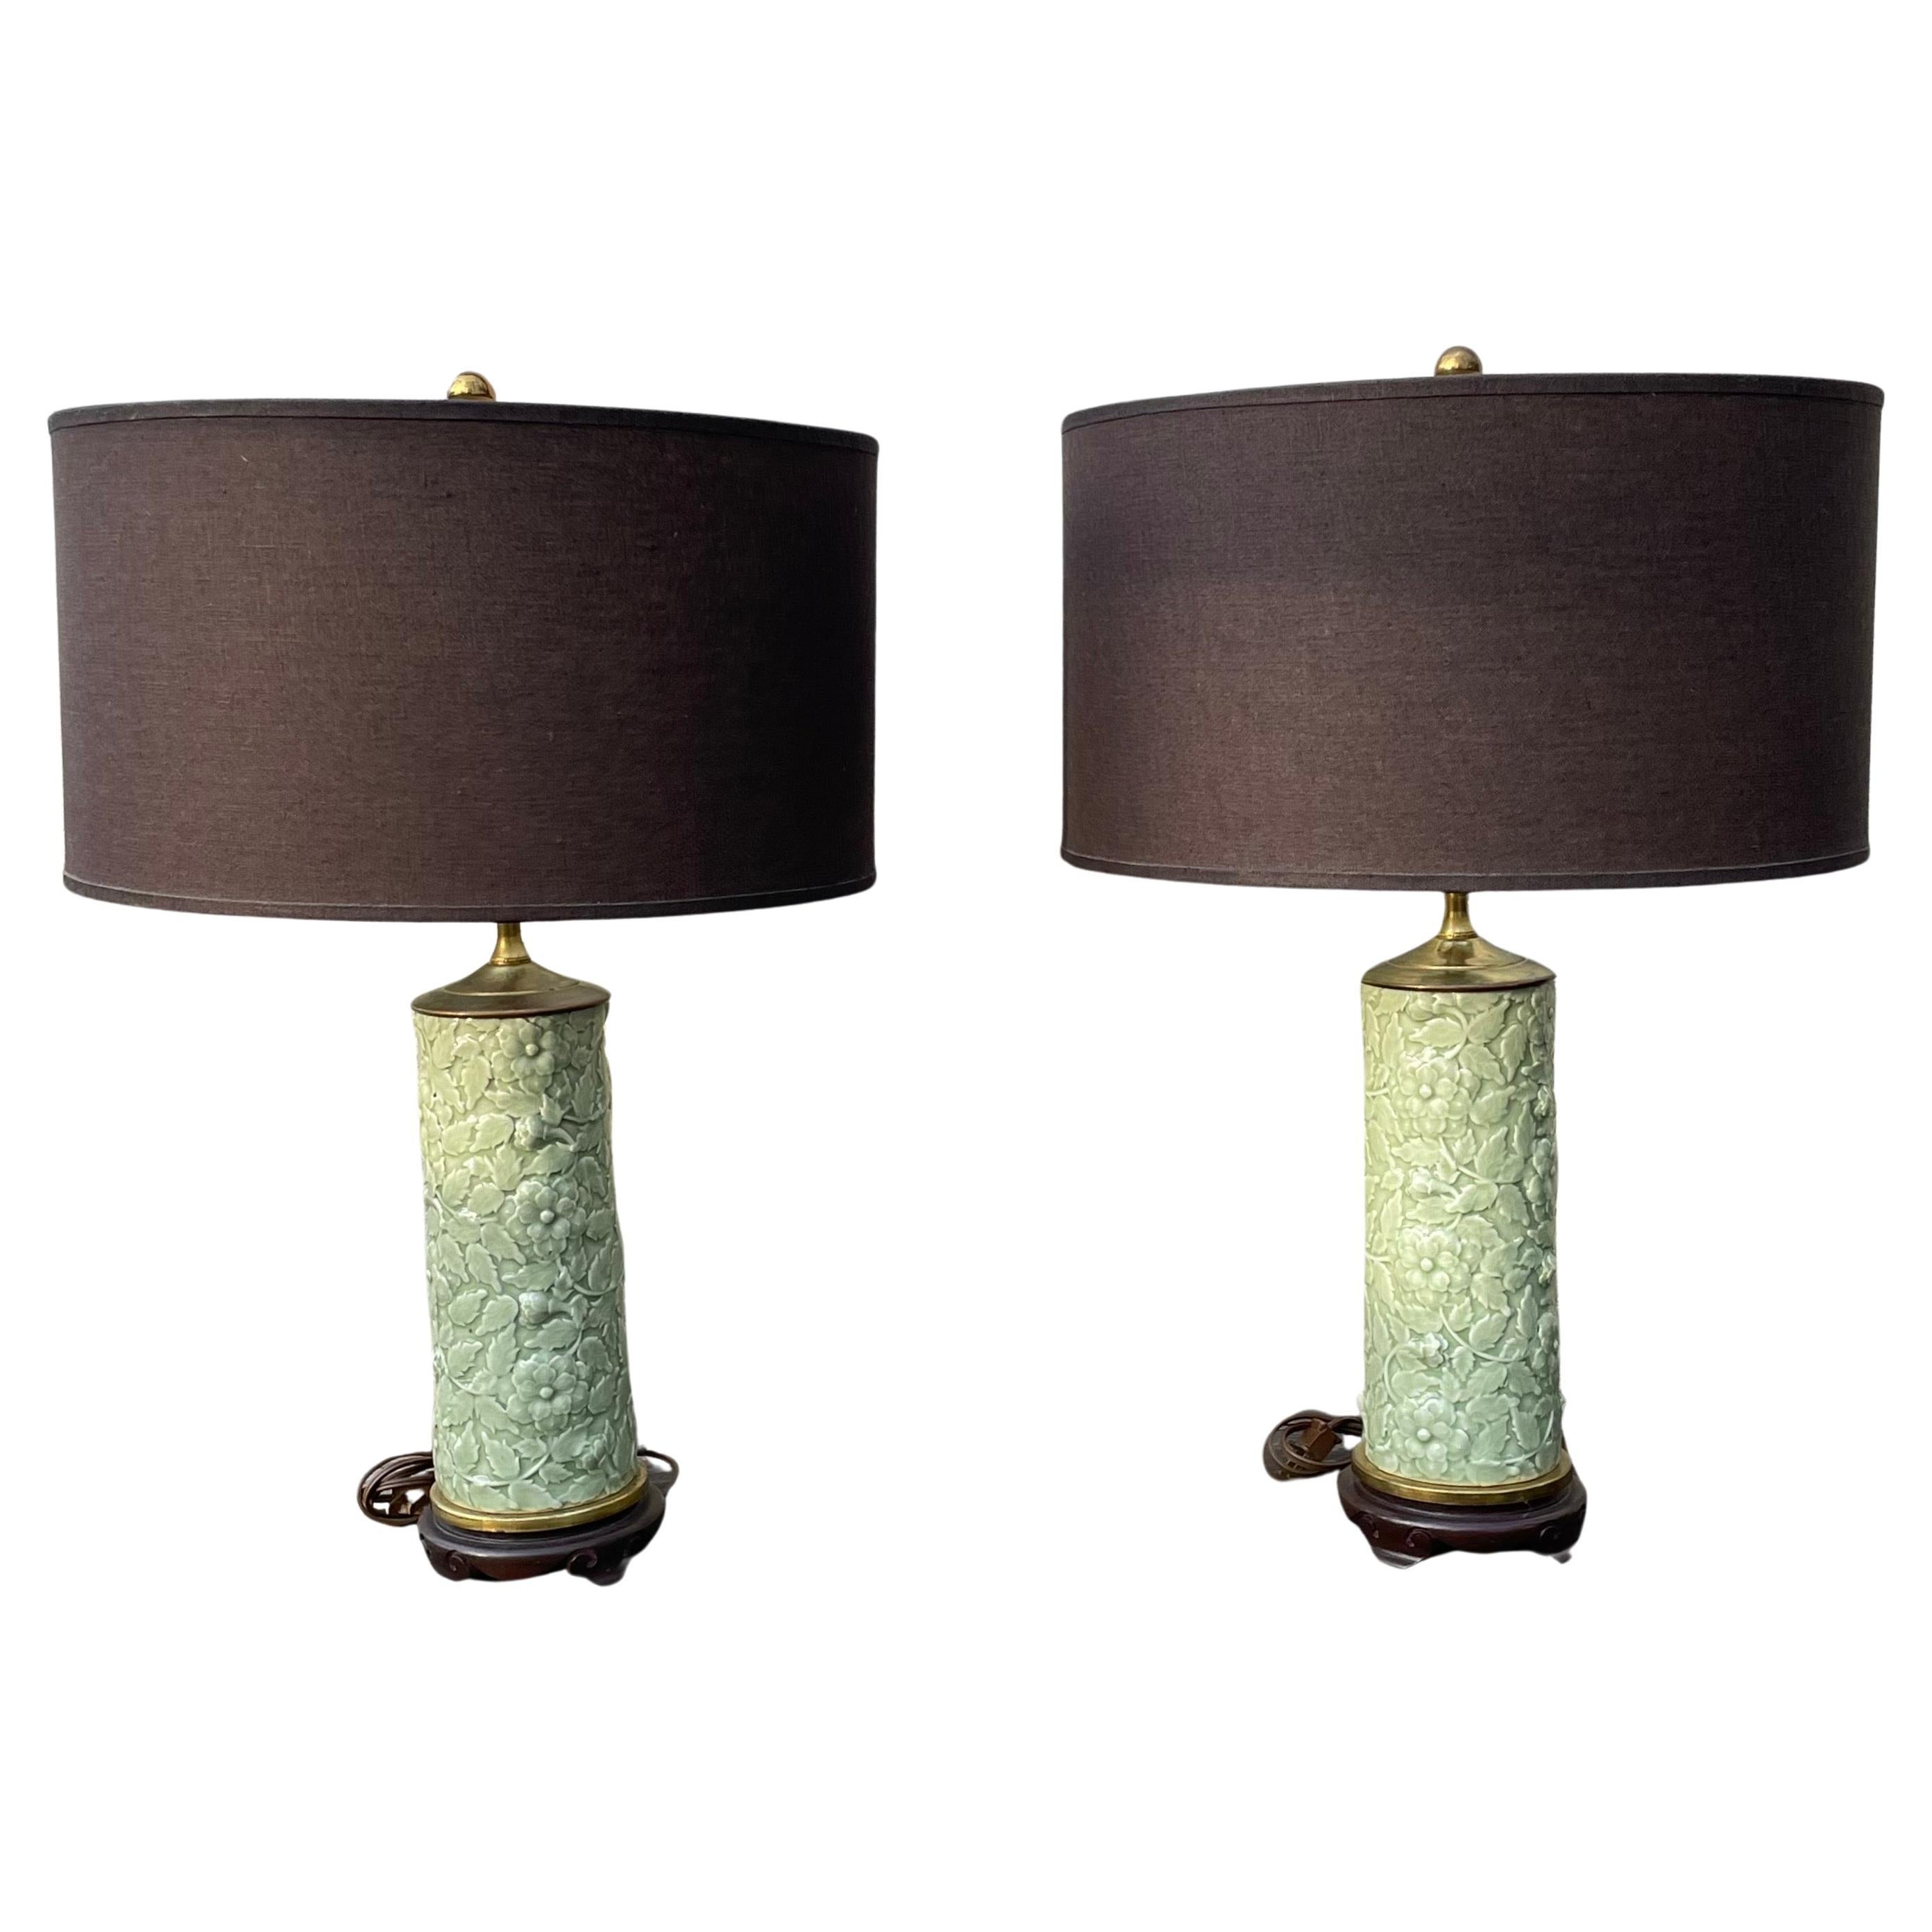 Pair of Table Lamps, Celadon Green Porcelain, Hollywood Regency